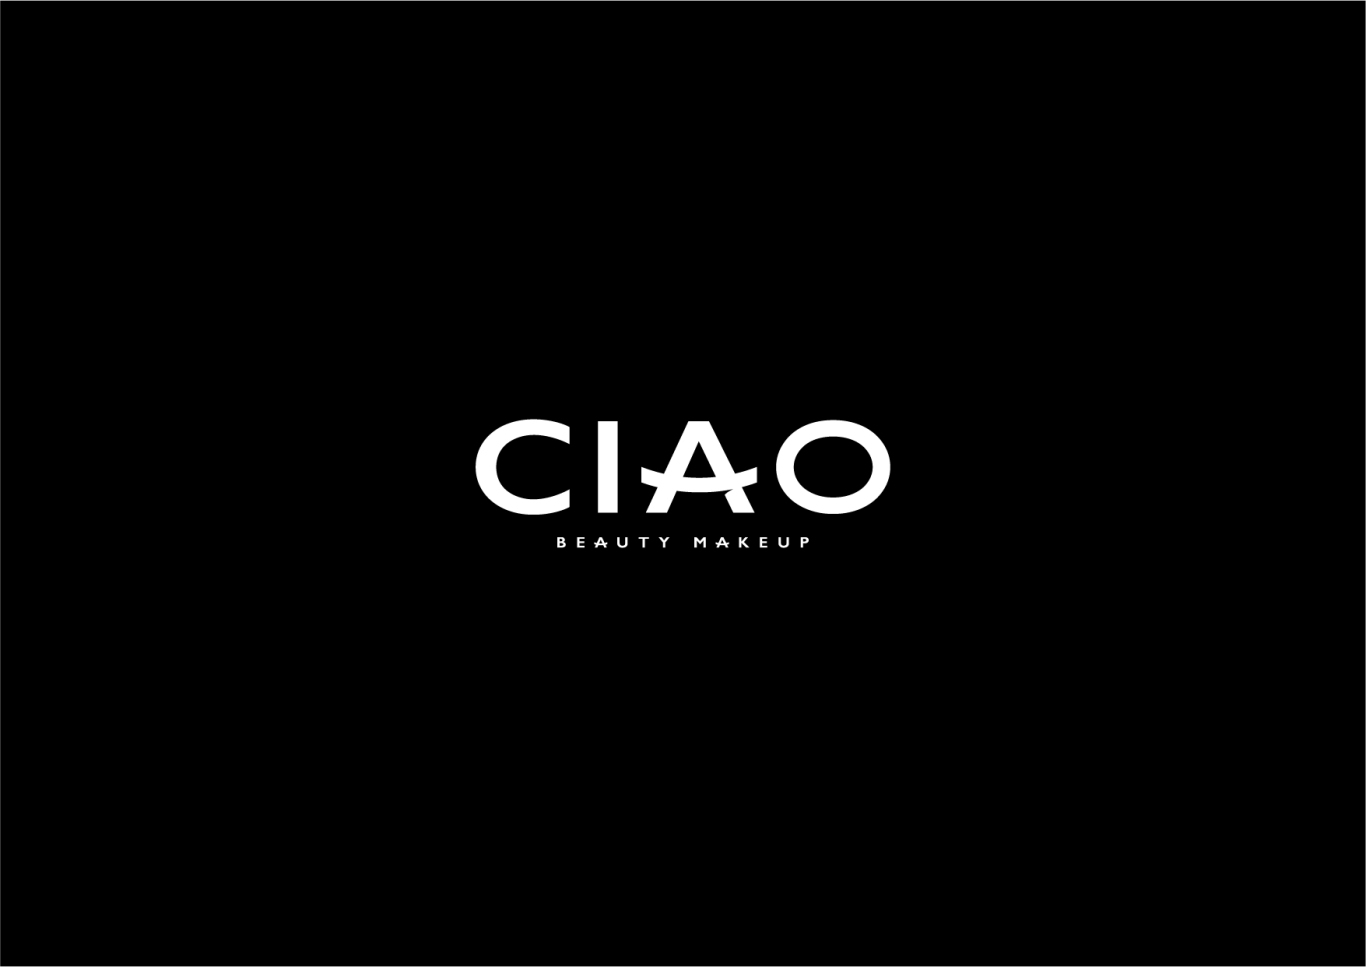 Ciao美妝logo設計圖1